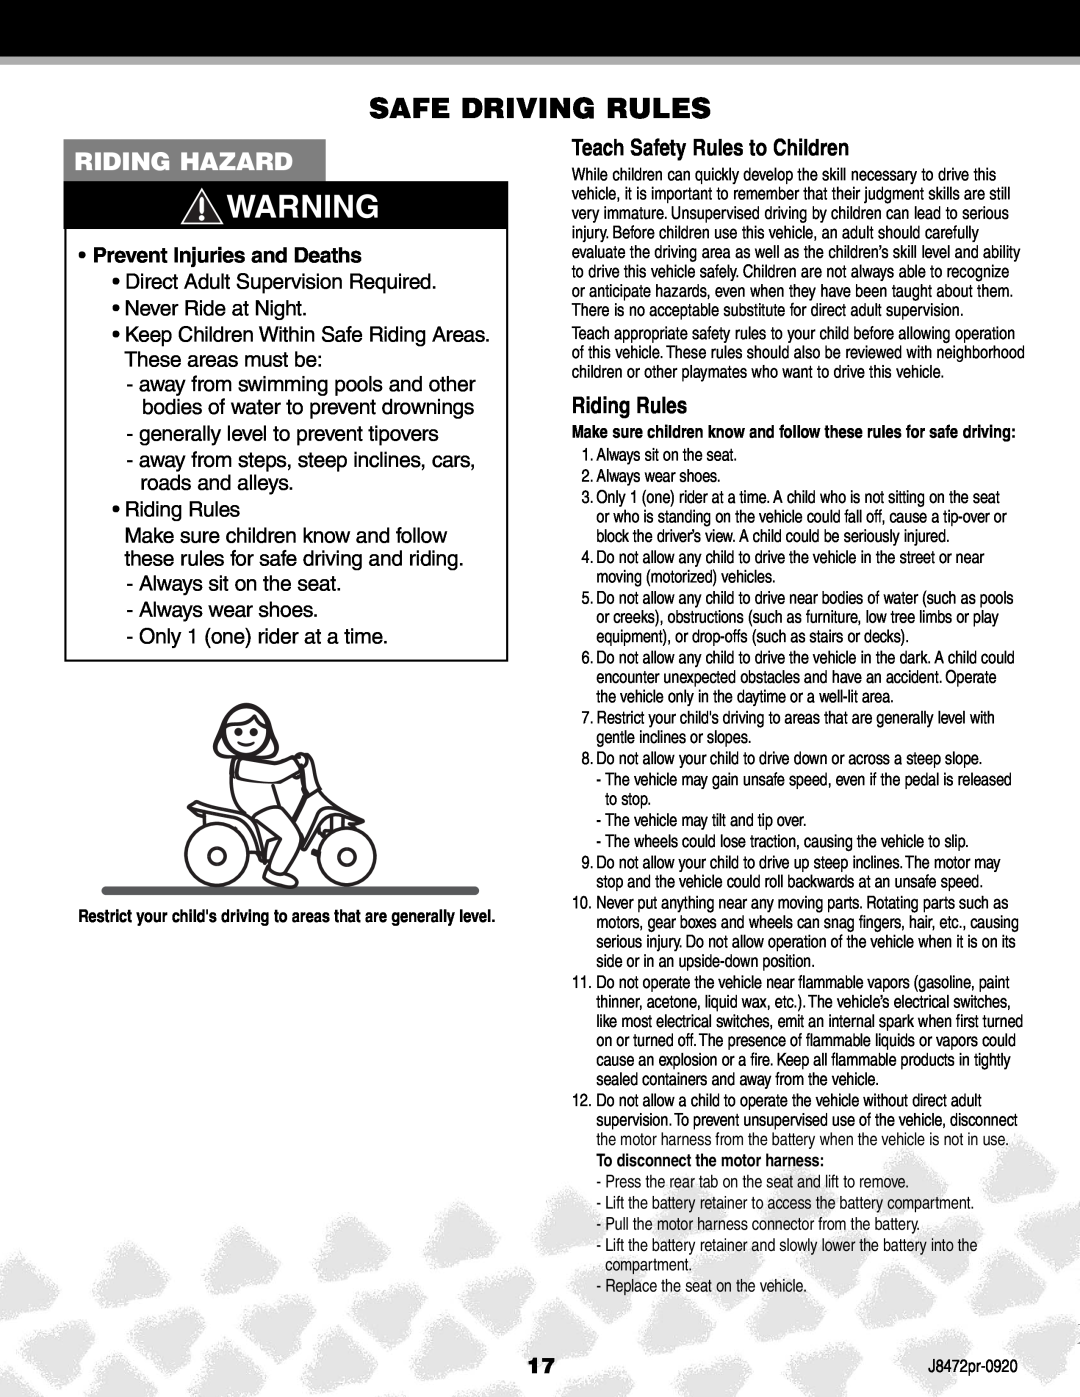 Kawasaki K0450, J8472PR manual Safe Driving Rules, Riding Hazard, Teach Safety Rules to Children, Riding Rules 